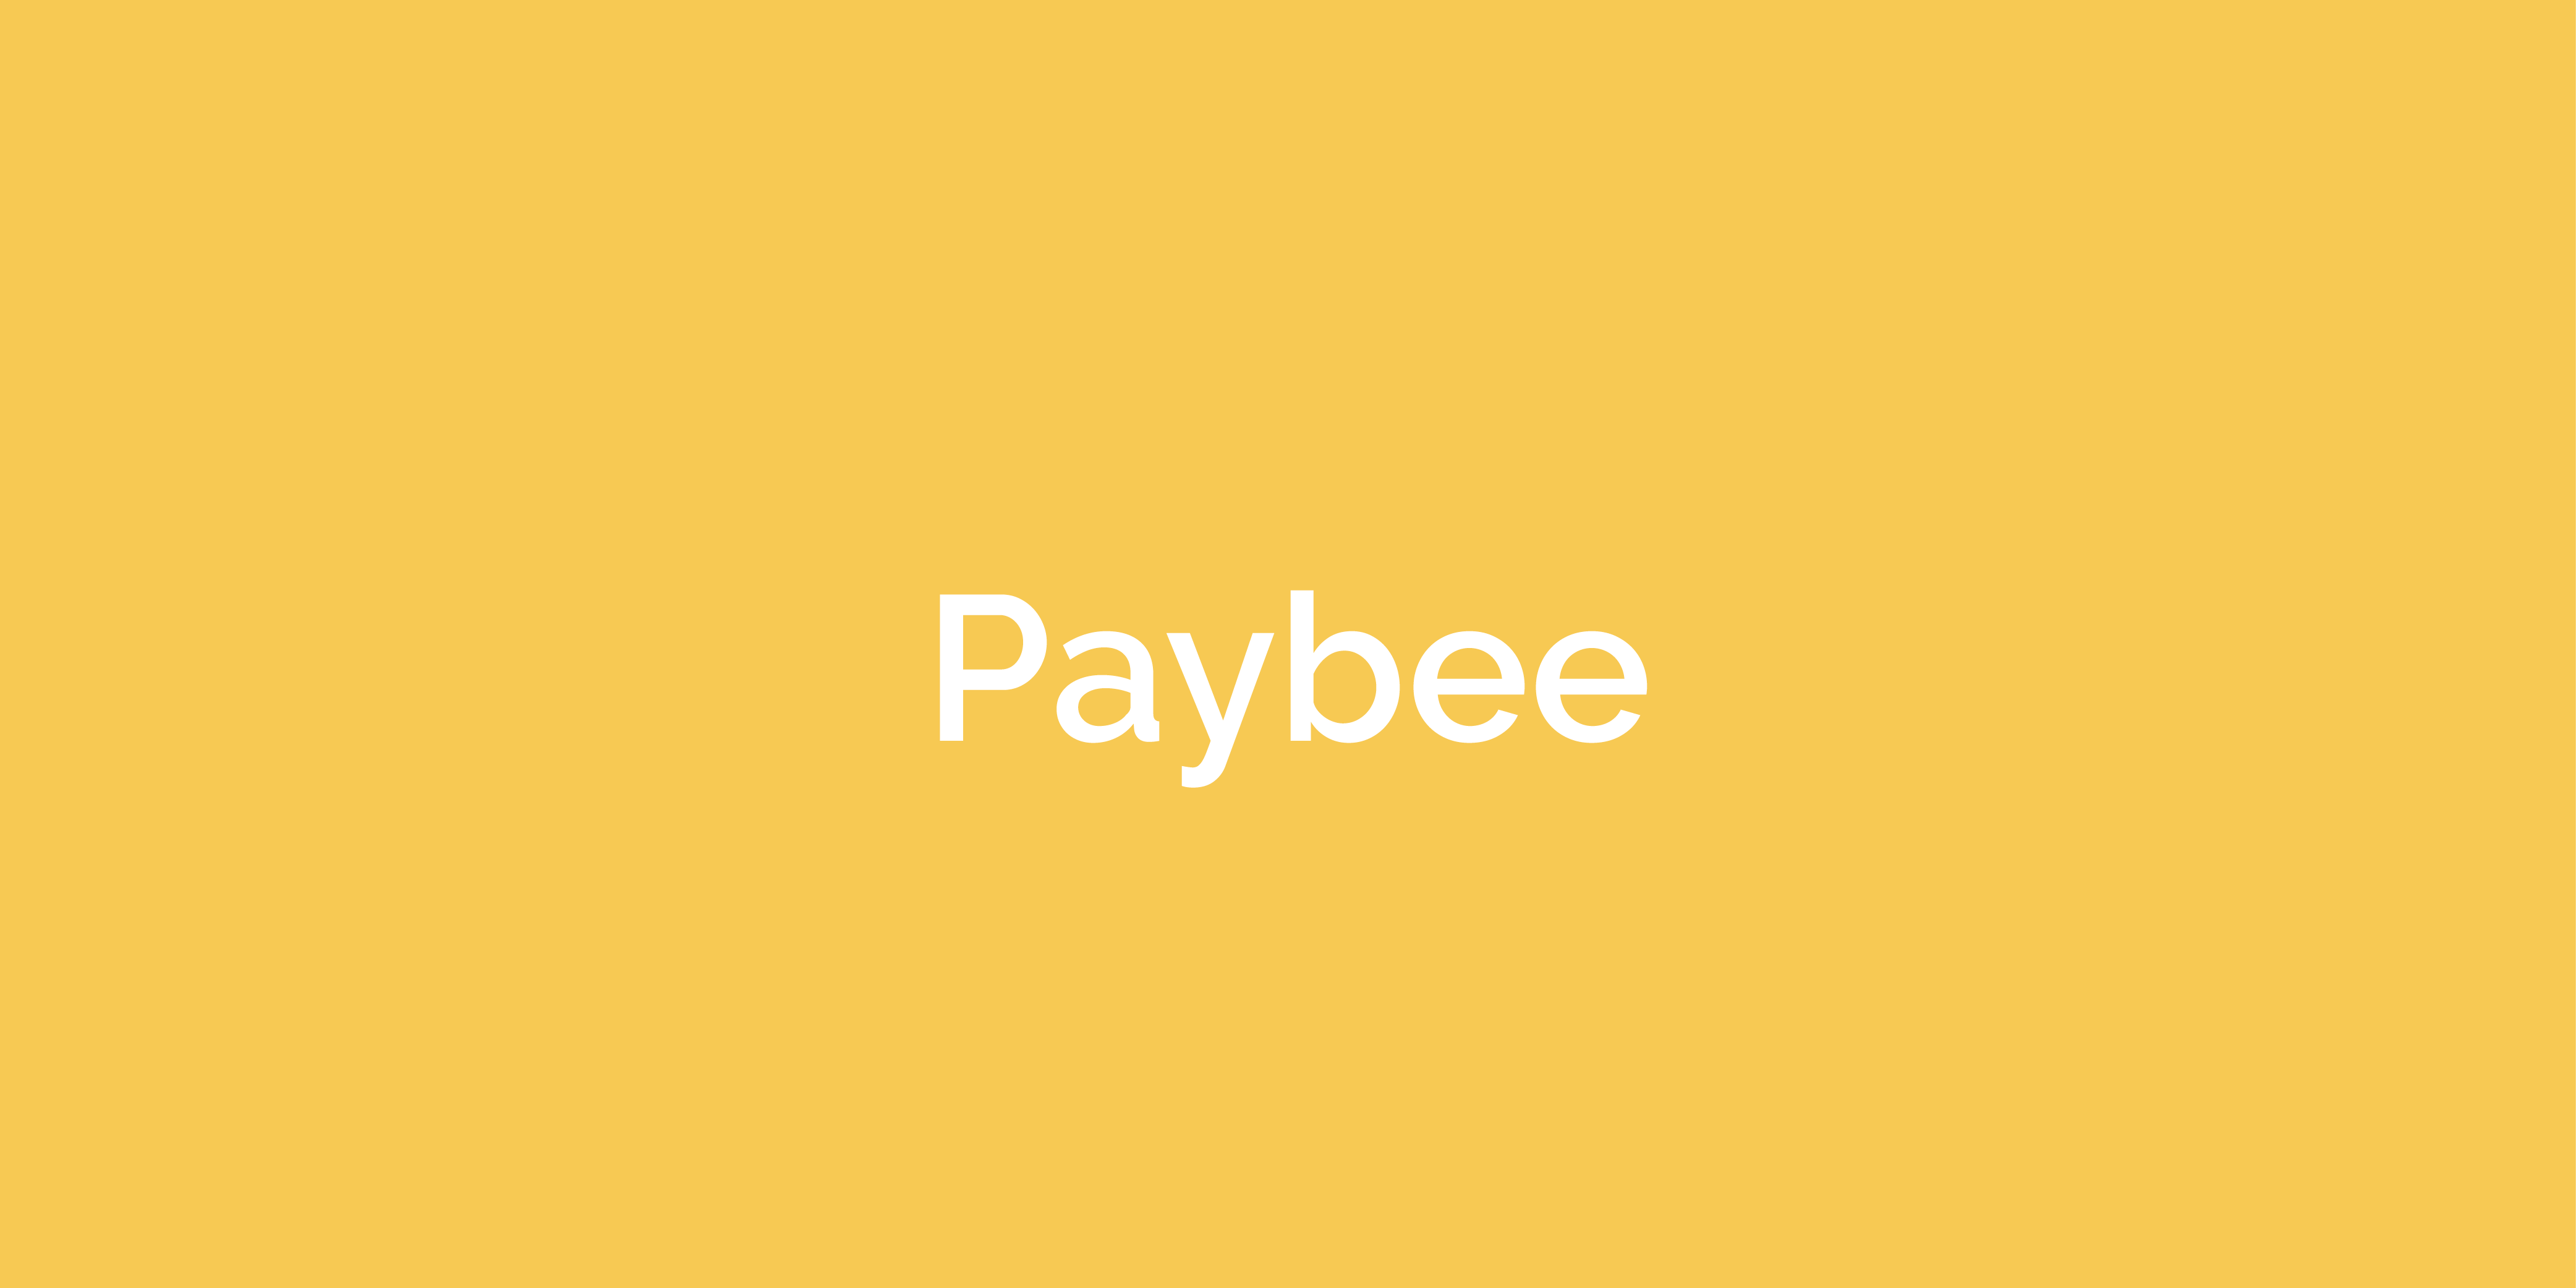 Paybee - Good Referrals - Nonprofit Hub